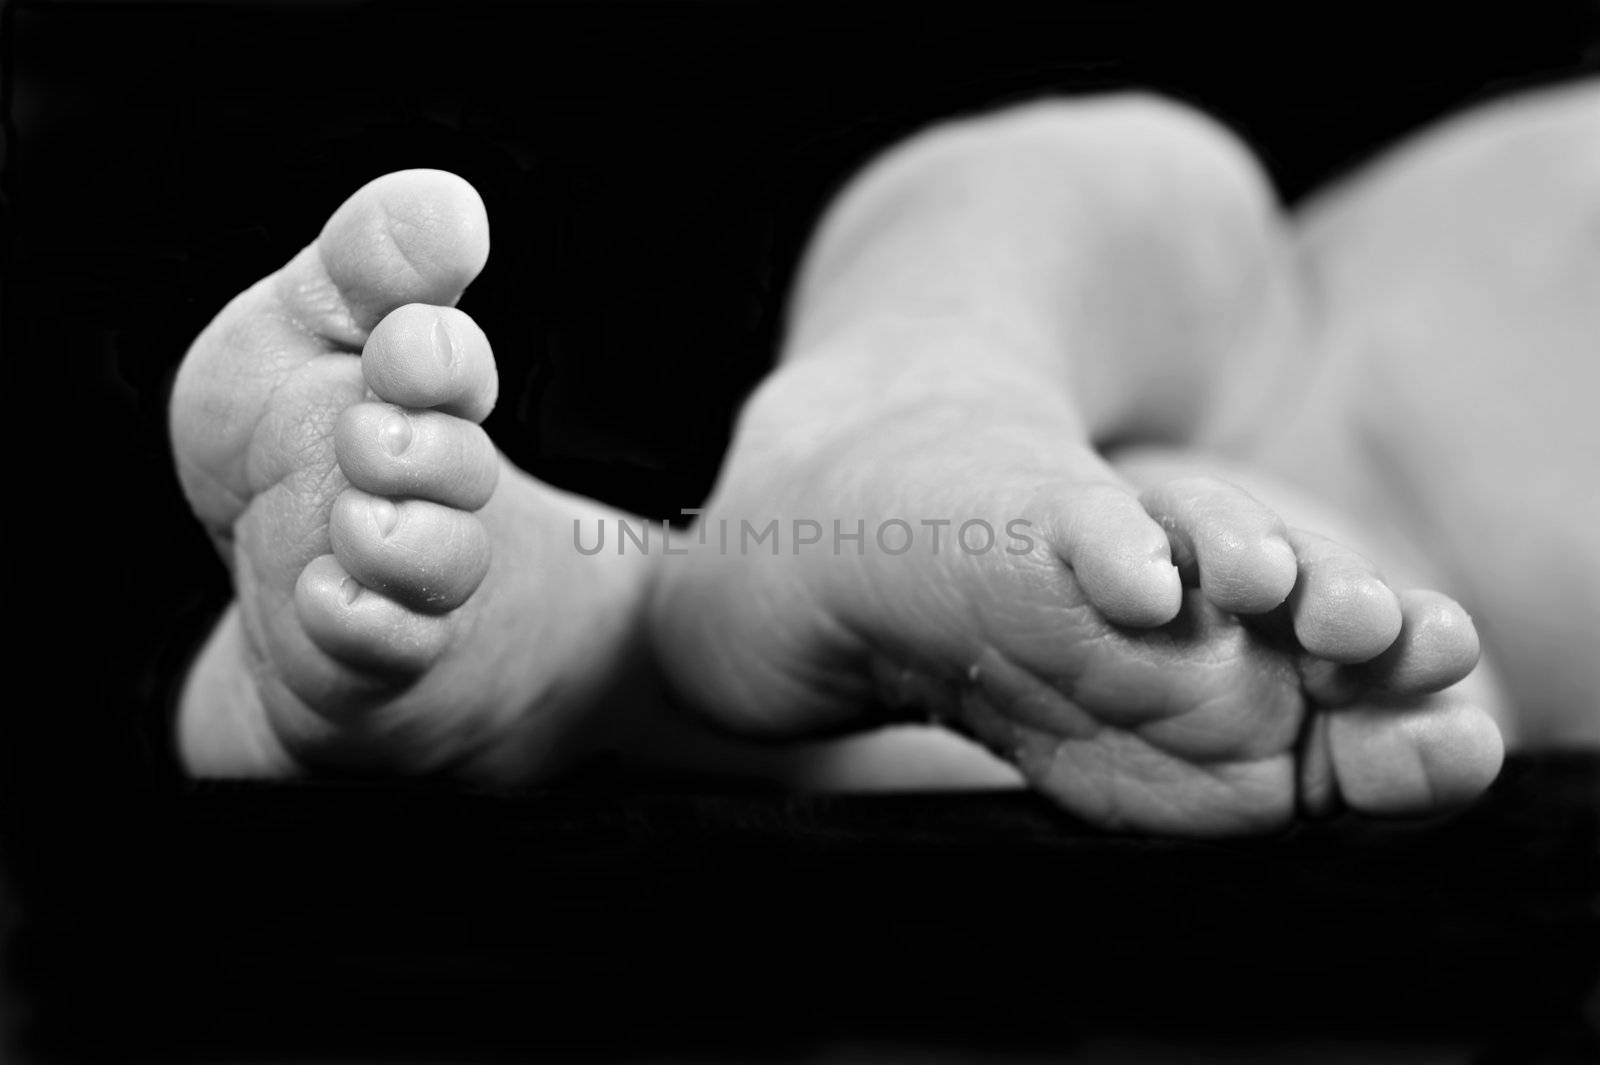 Little feet - the feet of a new born baby